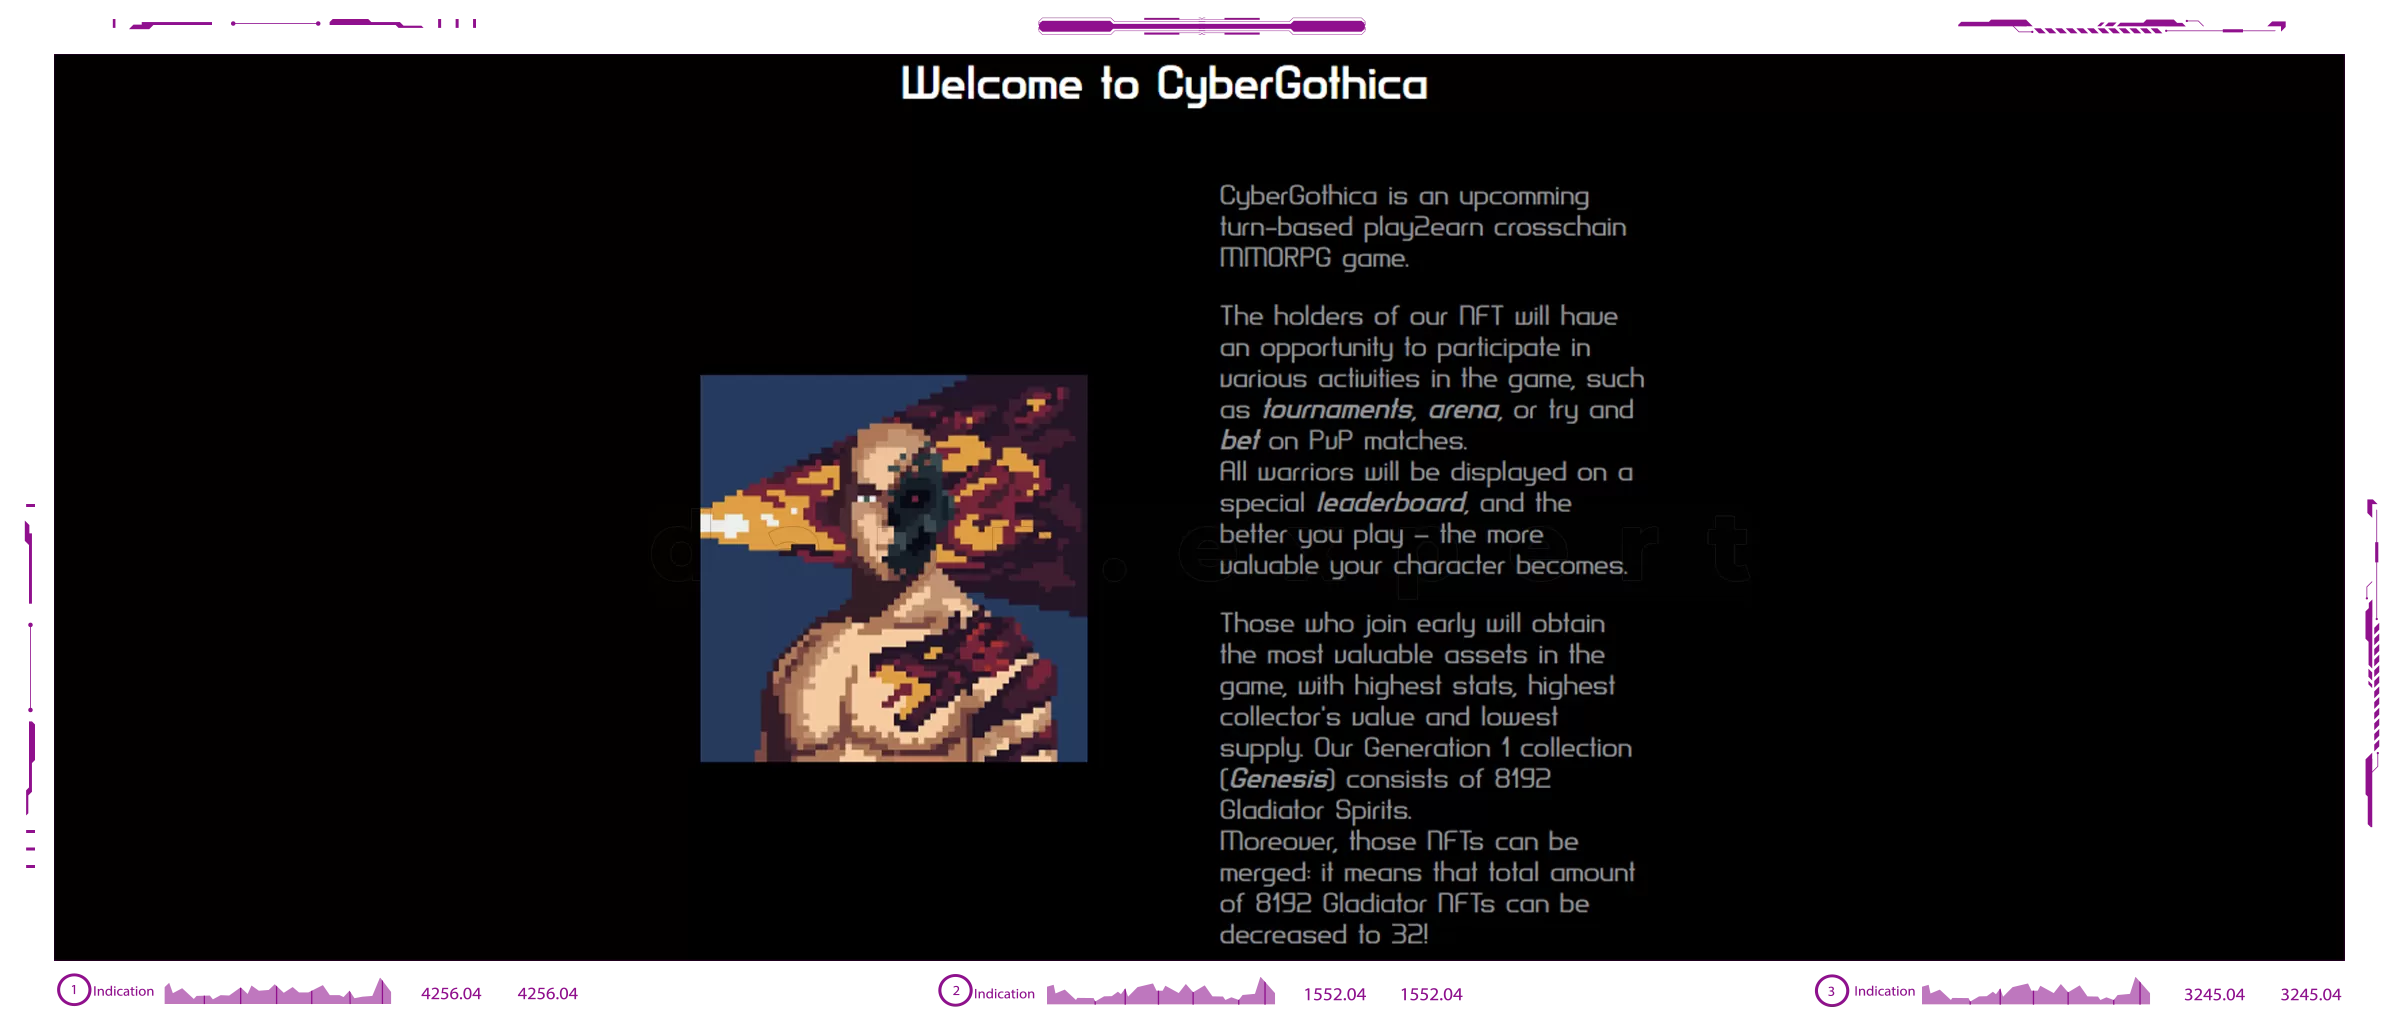 Cyber Gothica dapps